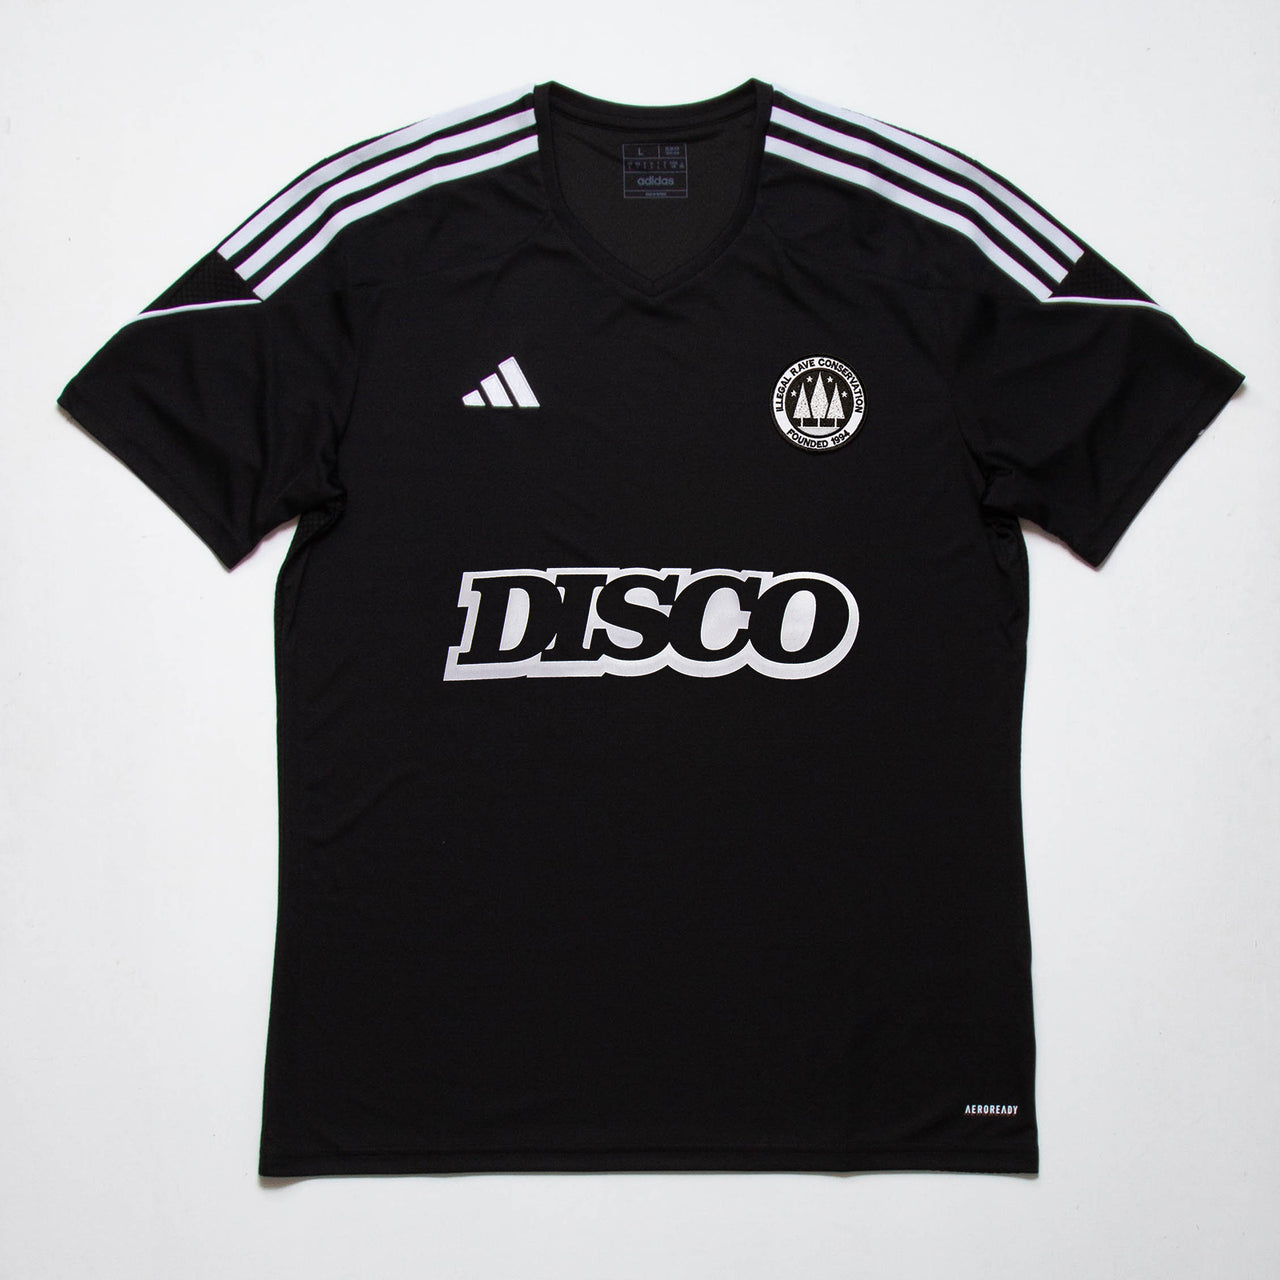 Disco Town FC League Tiro 23 - Training Jersey - Black/White